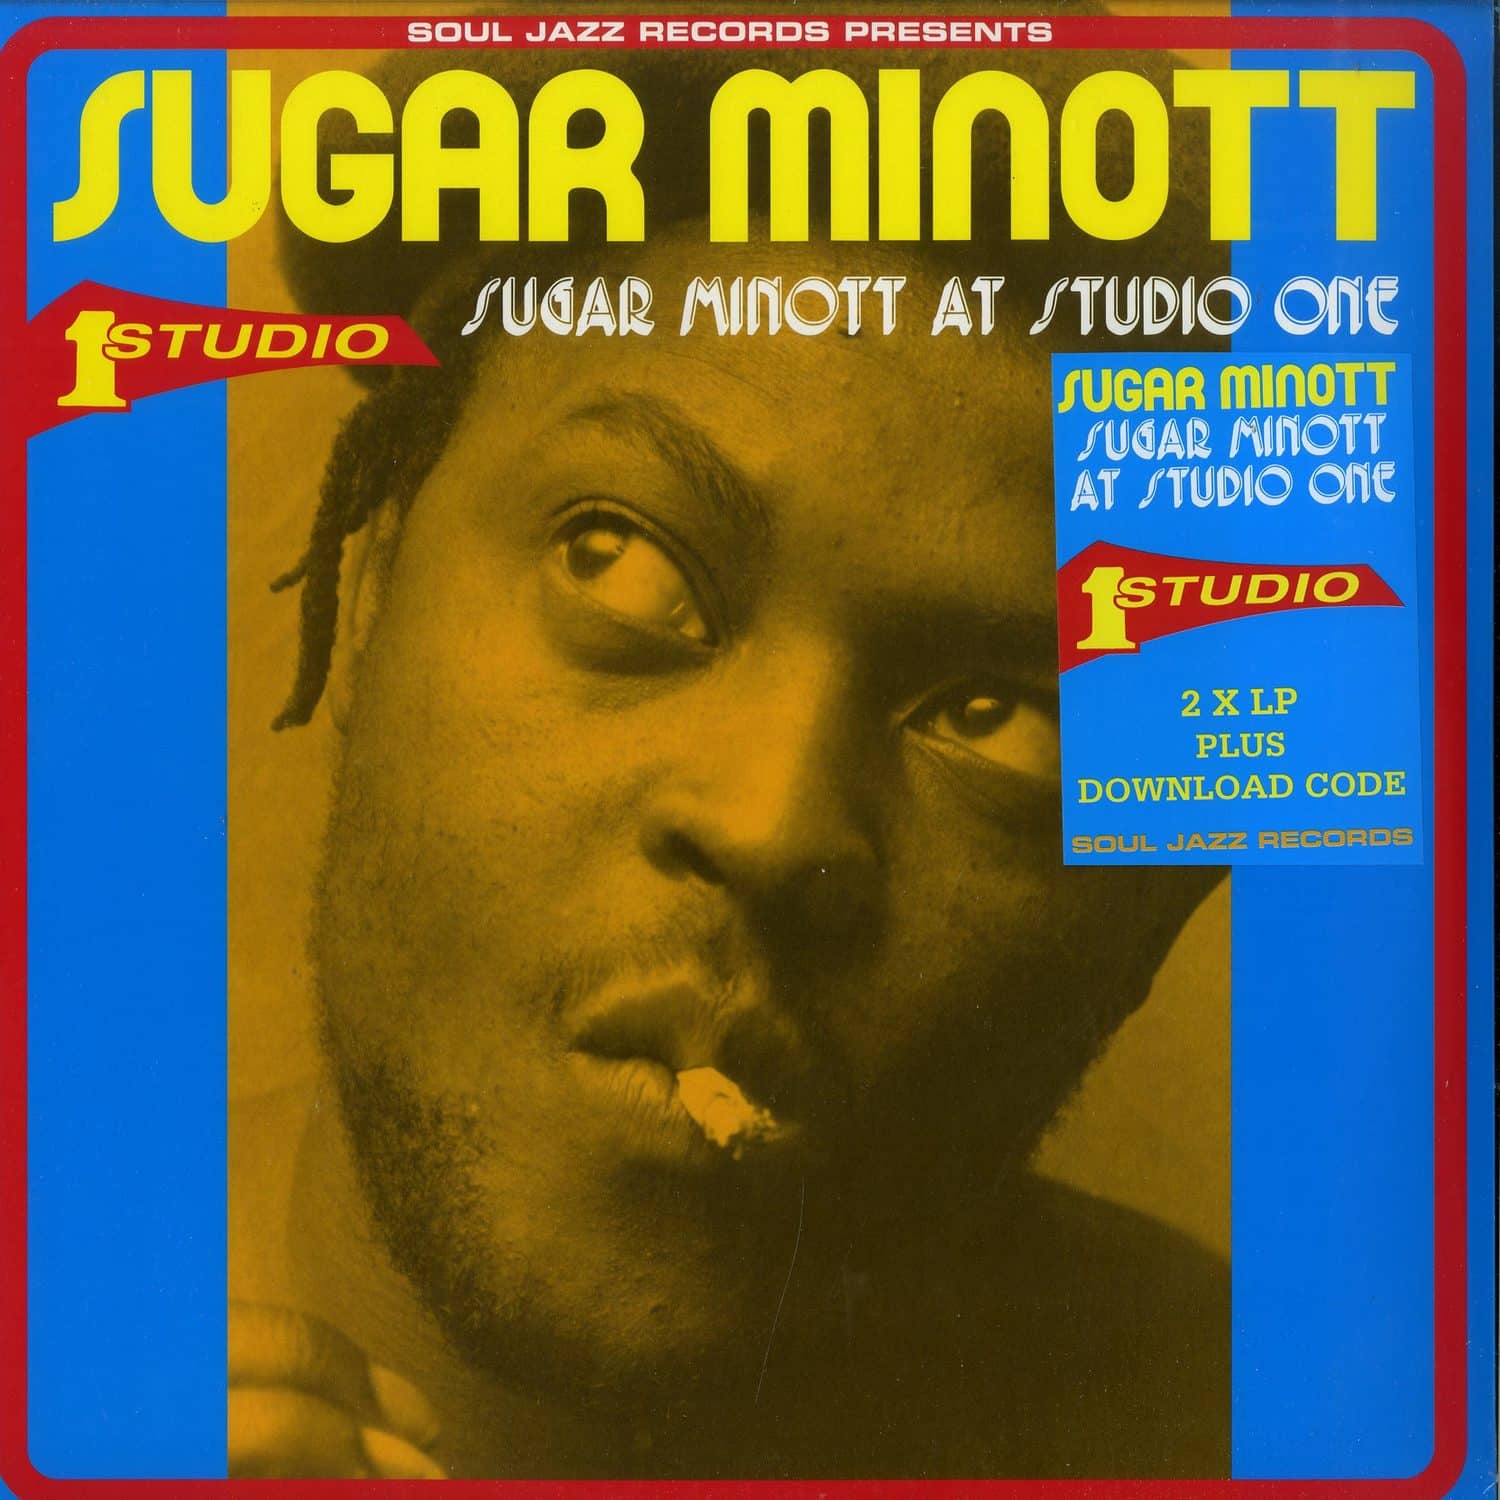 Sugar Minott - SUGAR MINOTT AT STUDIO ONE 